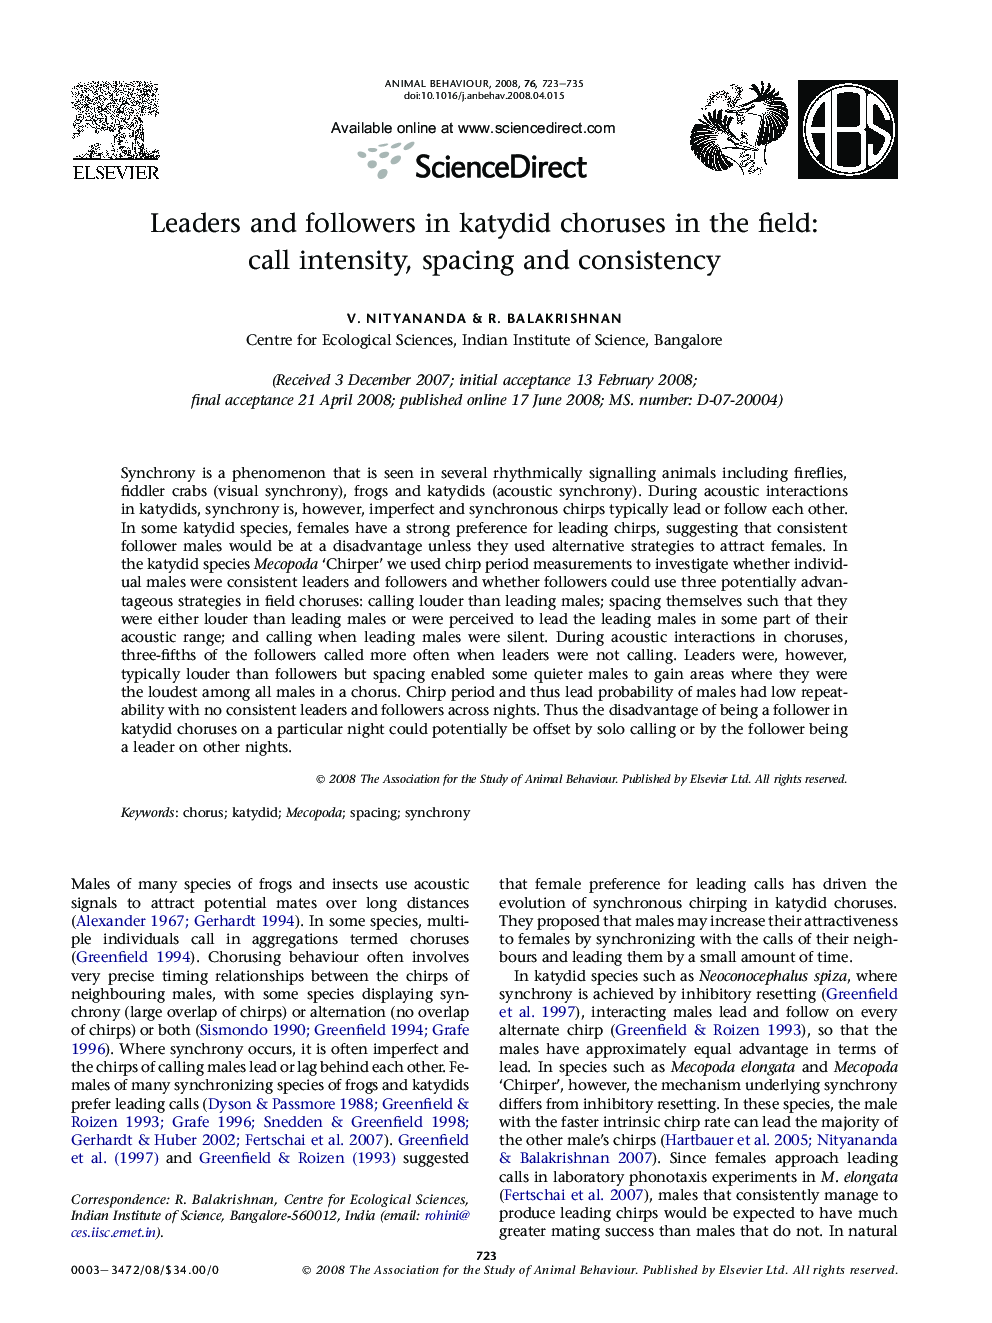 Leaders and followers in katydid choruses in the field: call intensity, spacing and consistency